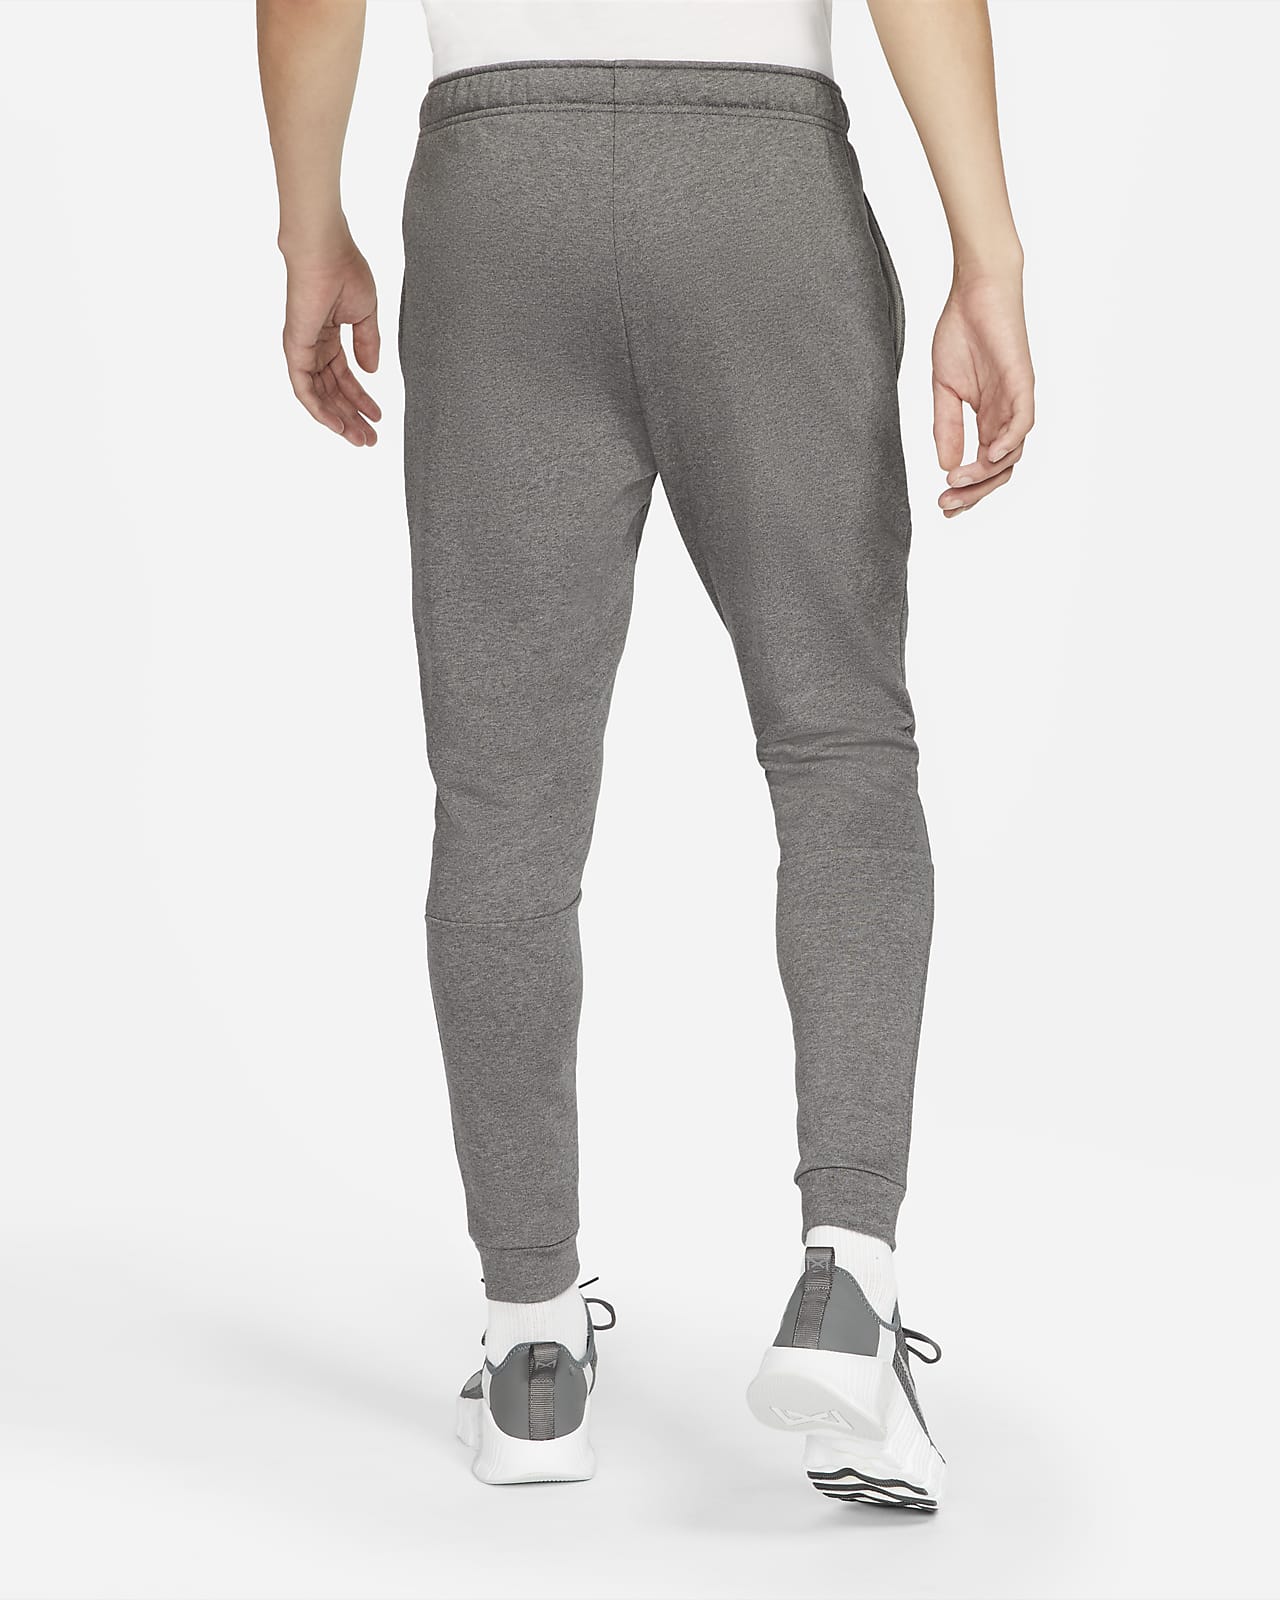 Nike Dri-FIT Flex Men's Yoga Pants Tapered Joggers Black Sz XL